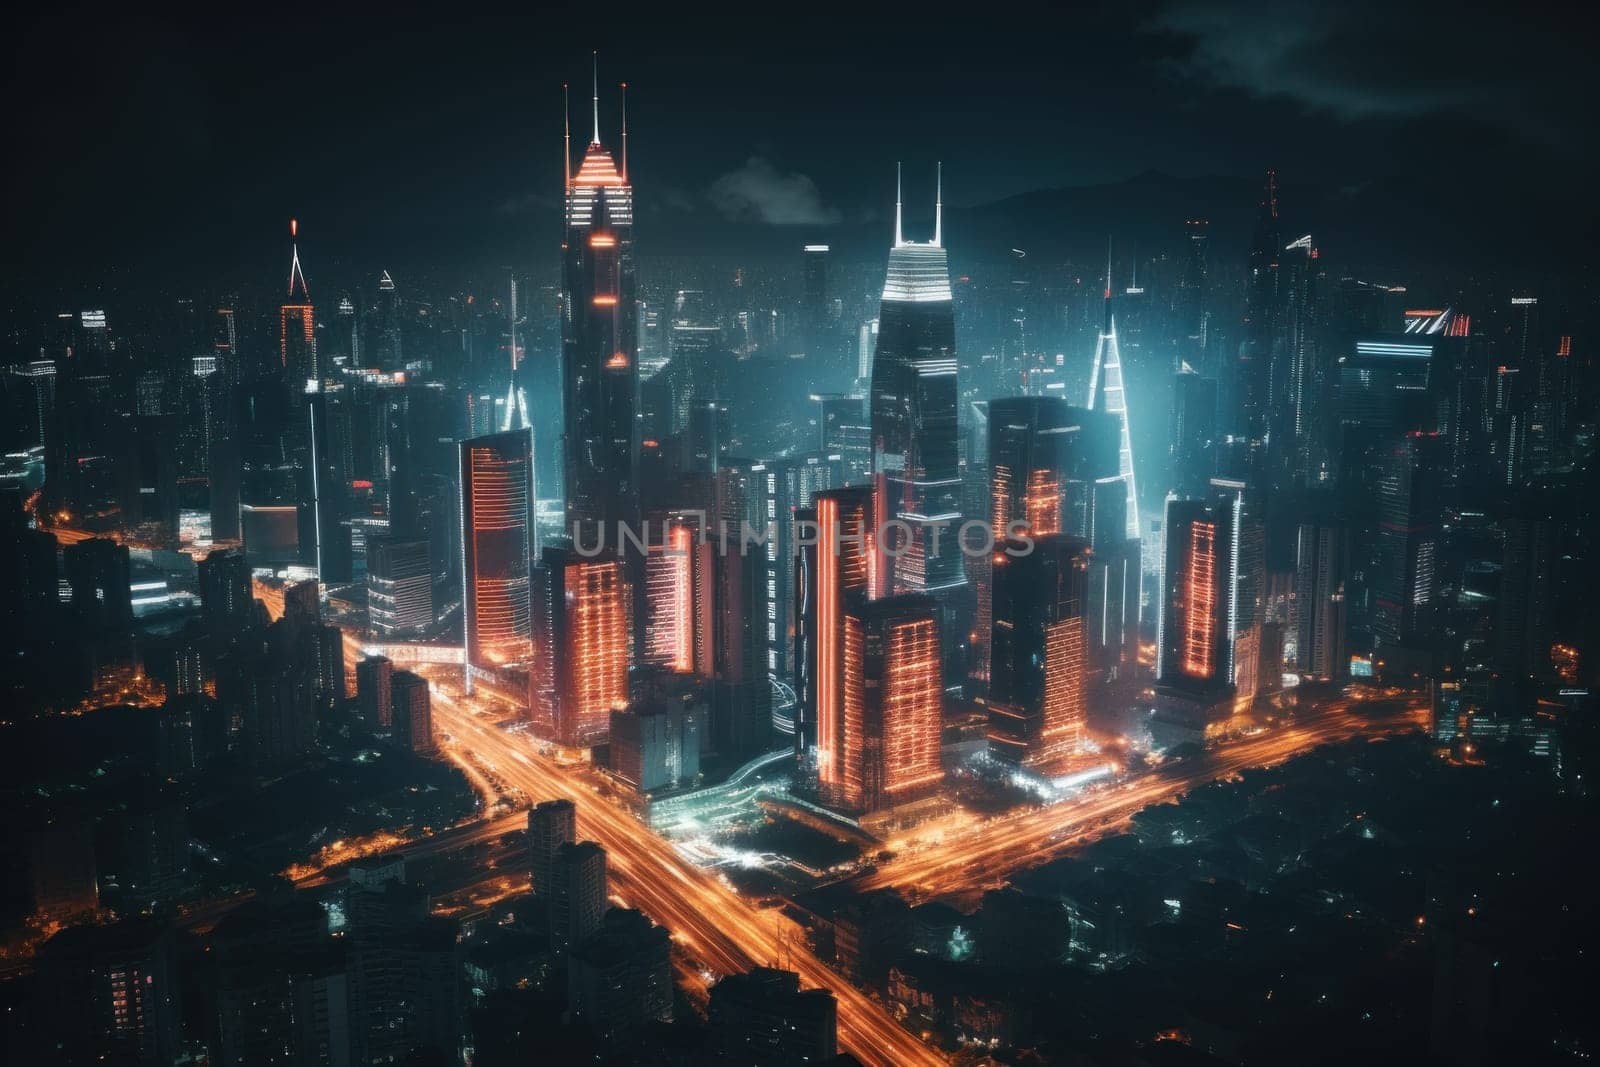 Aerial view of neon city, Cyberpunk metropolis at night by nijieimu